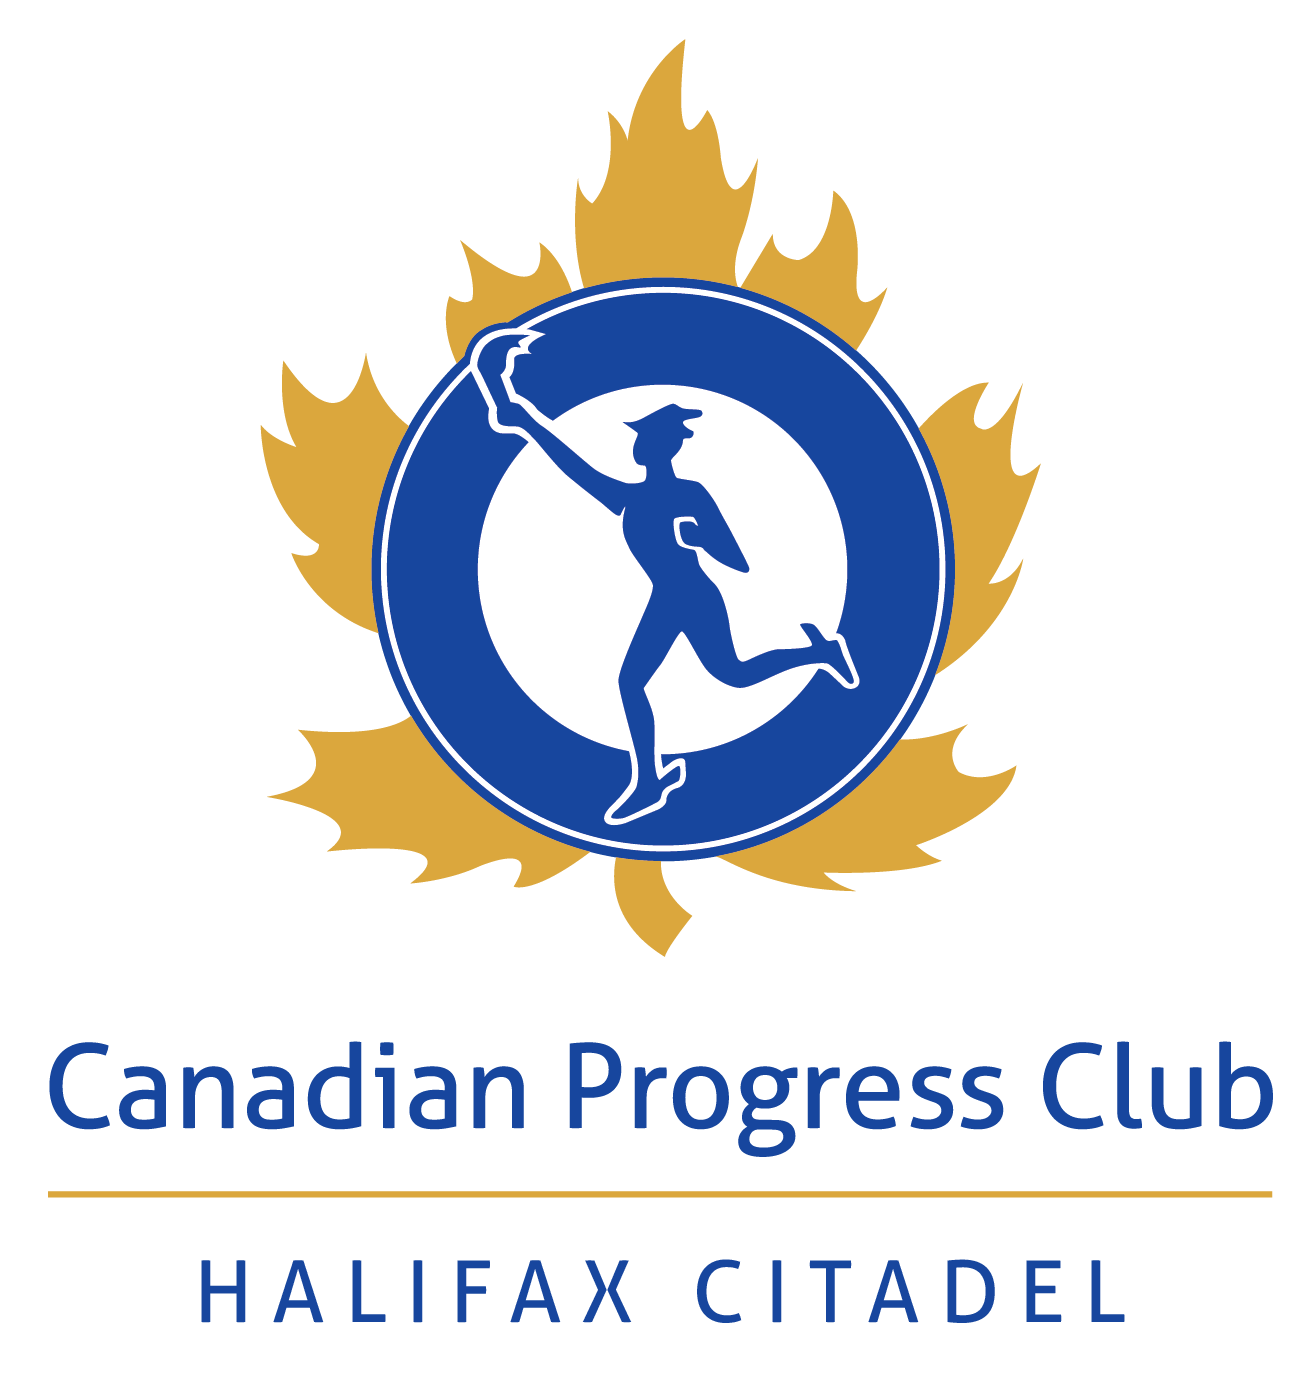 Halifax Citadel Progress Club logo